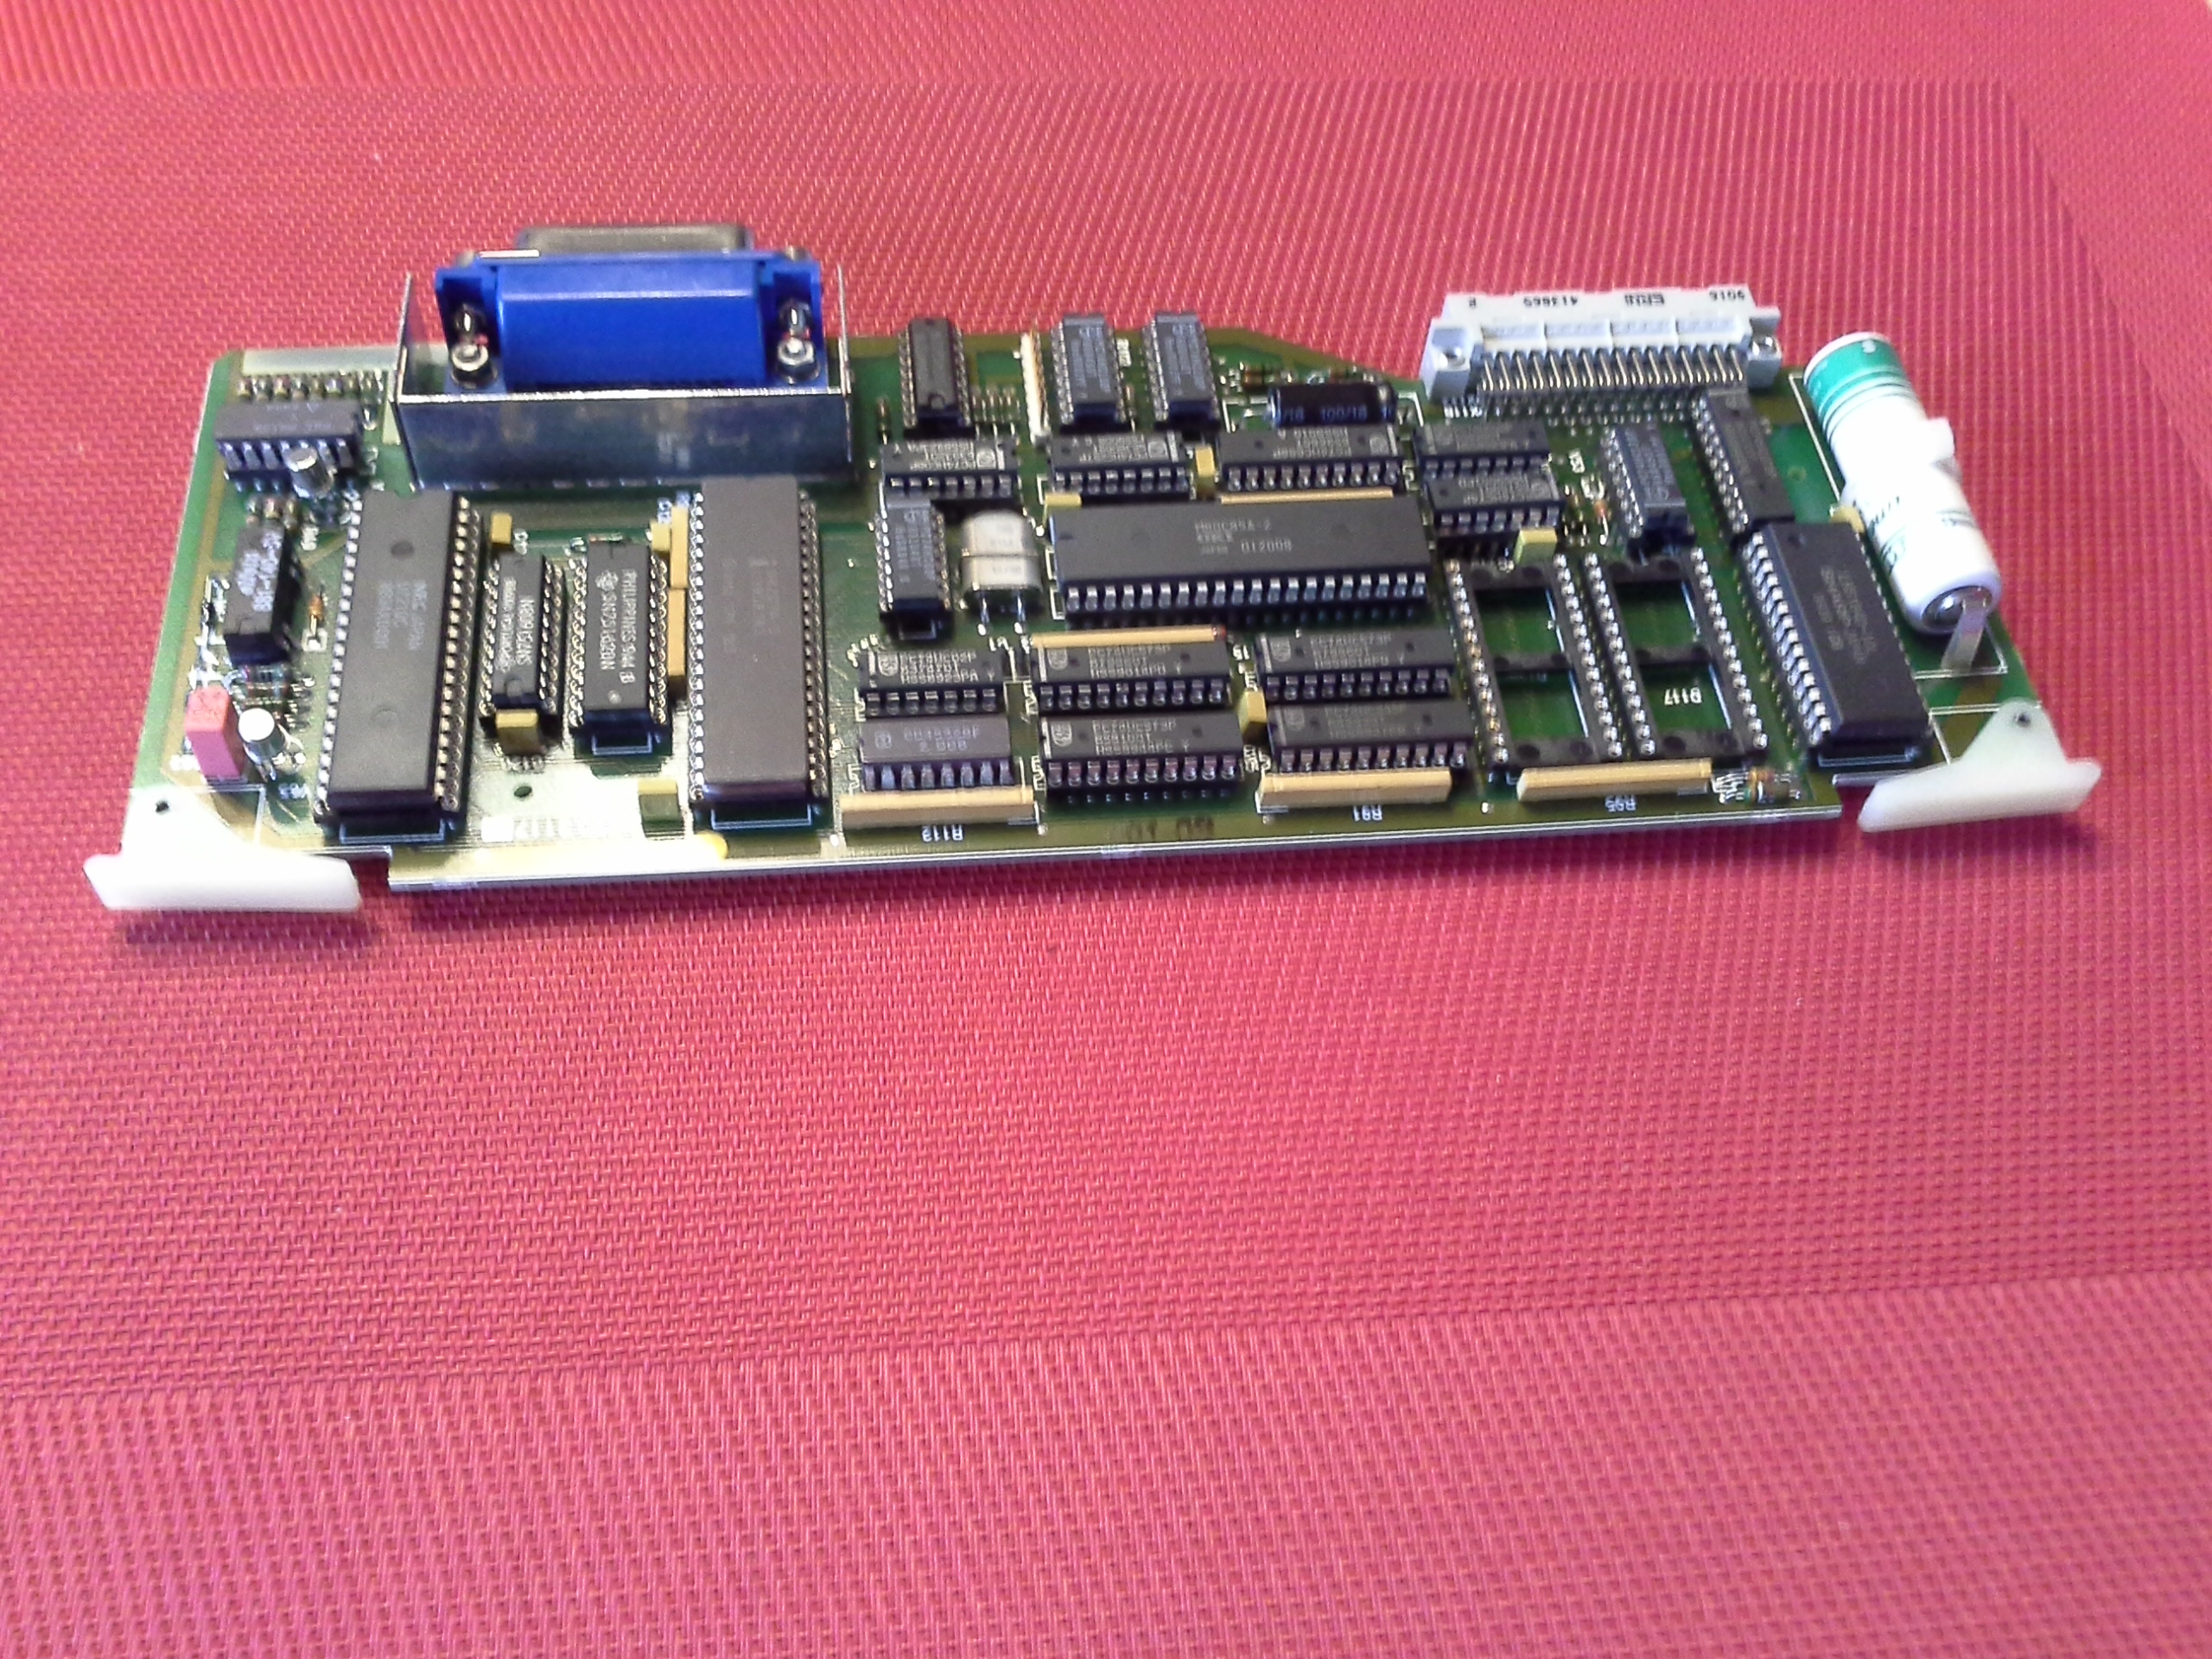 Gedruckte Schaltkreis Serial Adapter Cards for IBM PC